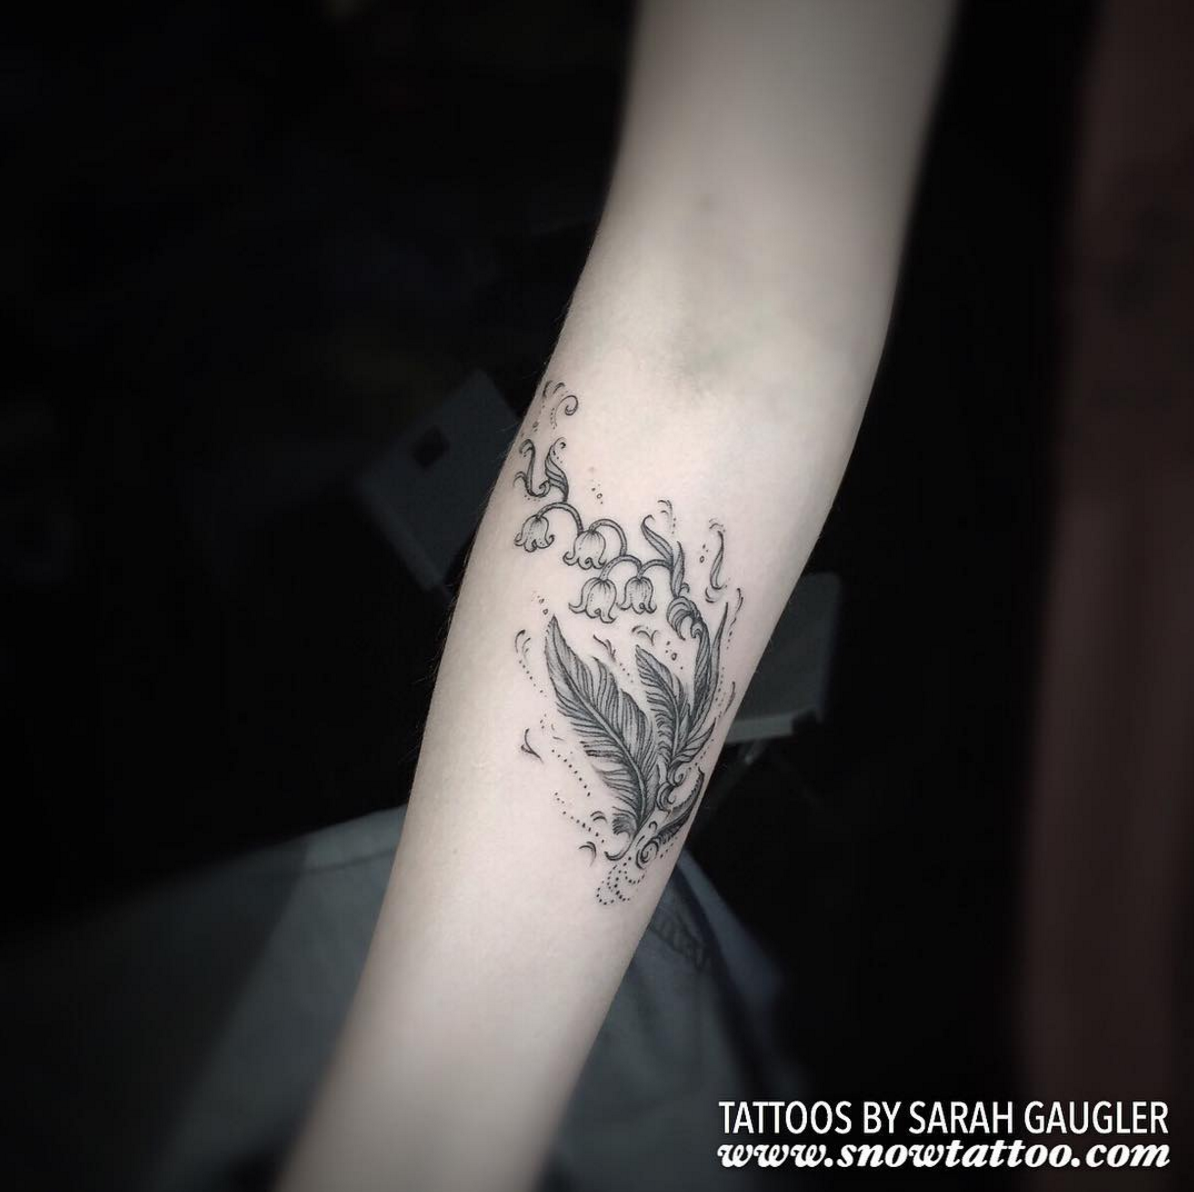 Sarah Gaugler Snow Tattoo Custom Floral Bell Flower New York Best Tattoos Best Tattoo Artist NYC.png